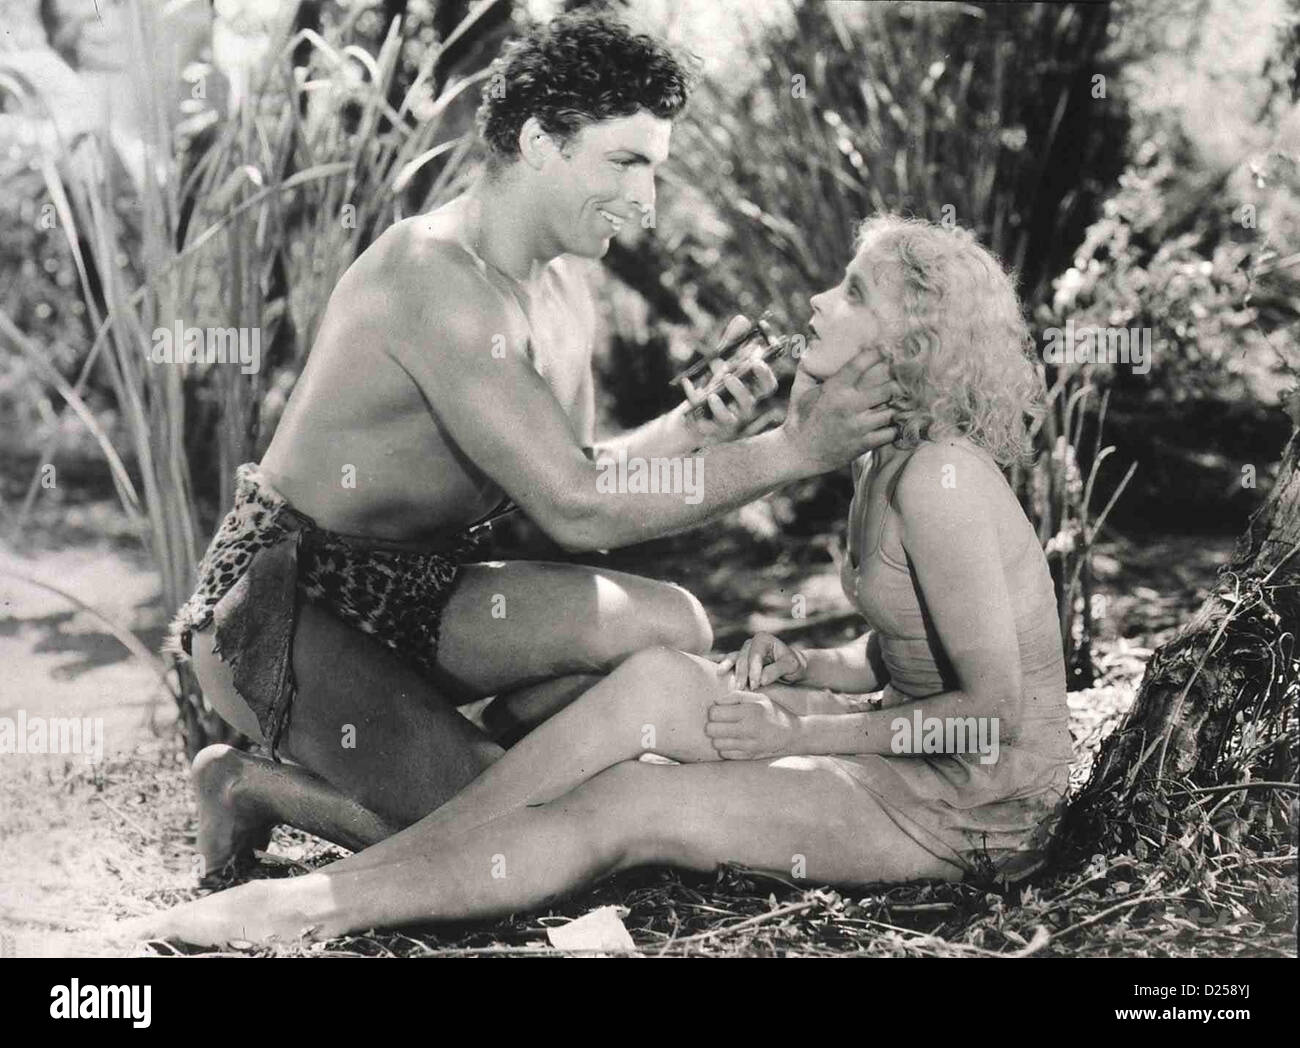 Buster Crabbe Tarzan The Fearless Hairless Chest Flash Gordon Beefcake  Photograph 1933